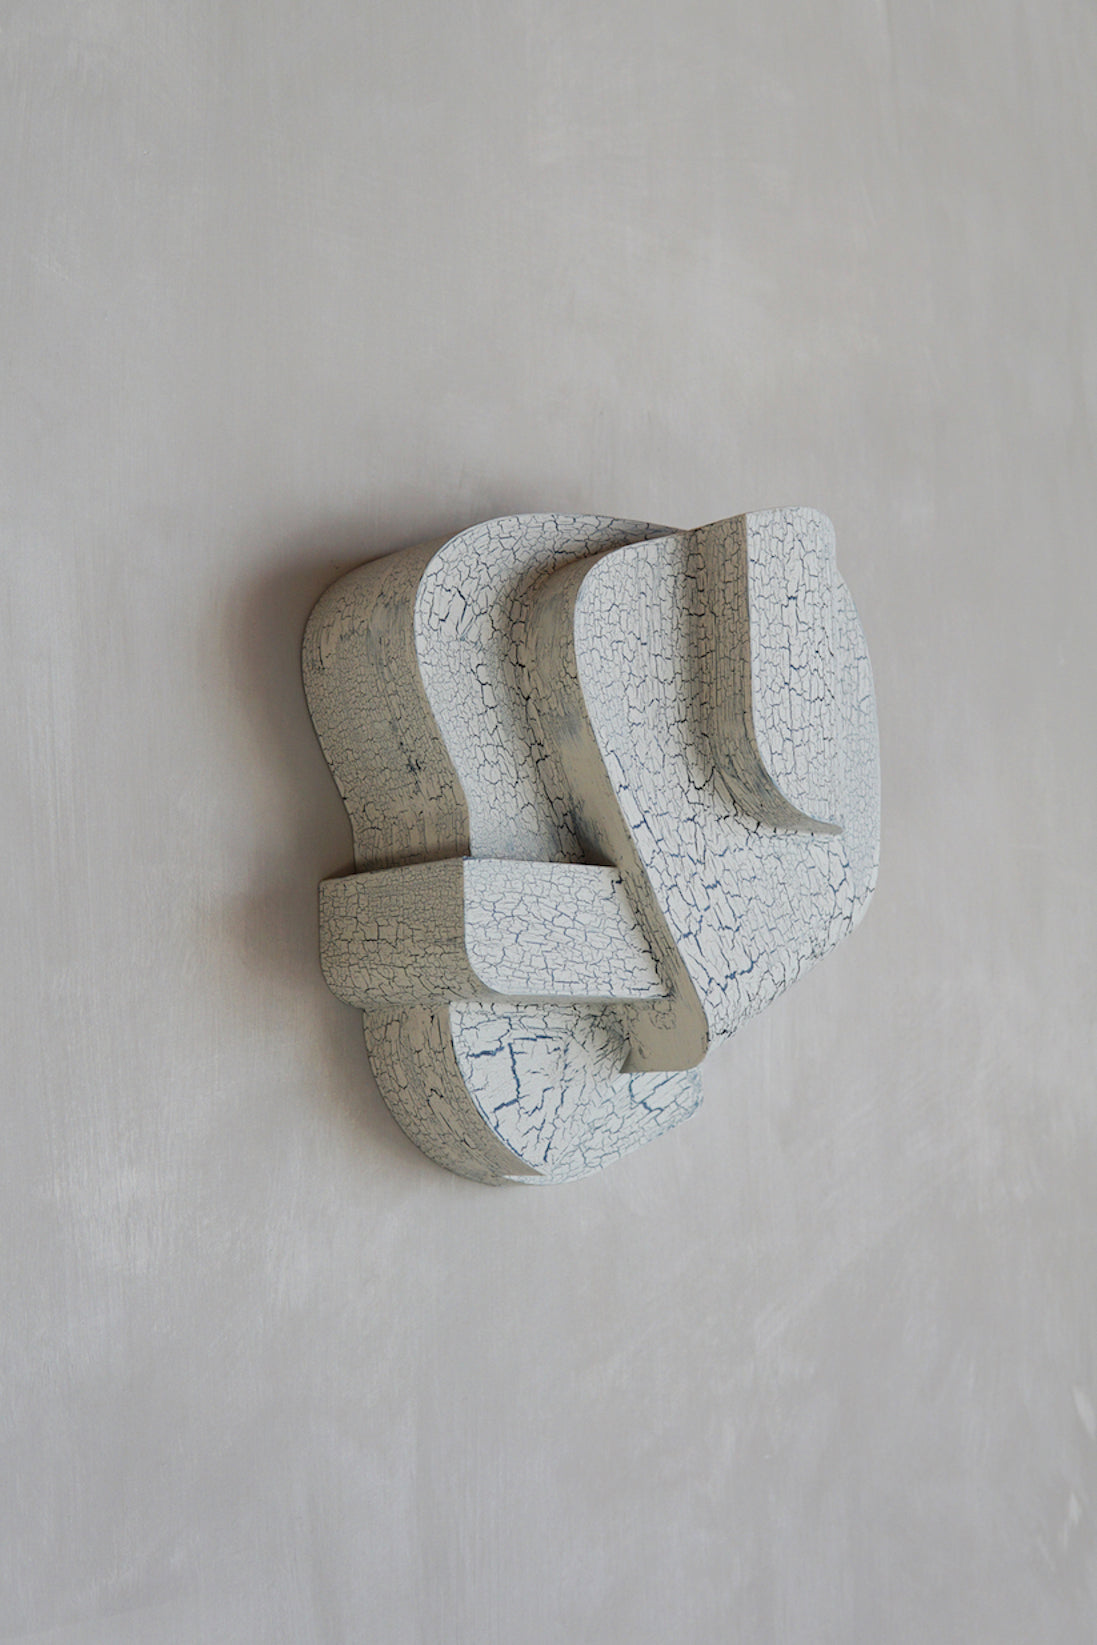 'Ko' Sculpture Crackle. By Edith Beurskens and Ilse van Stoltz